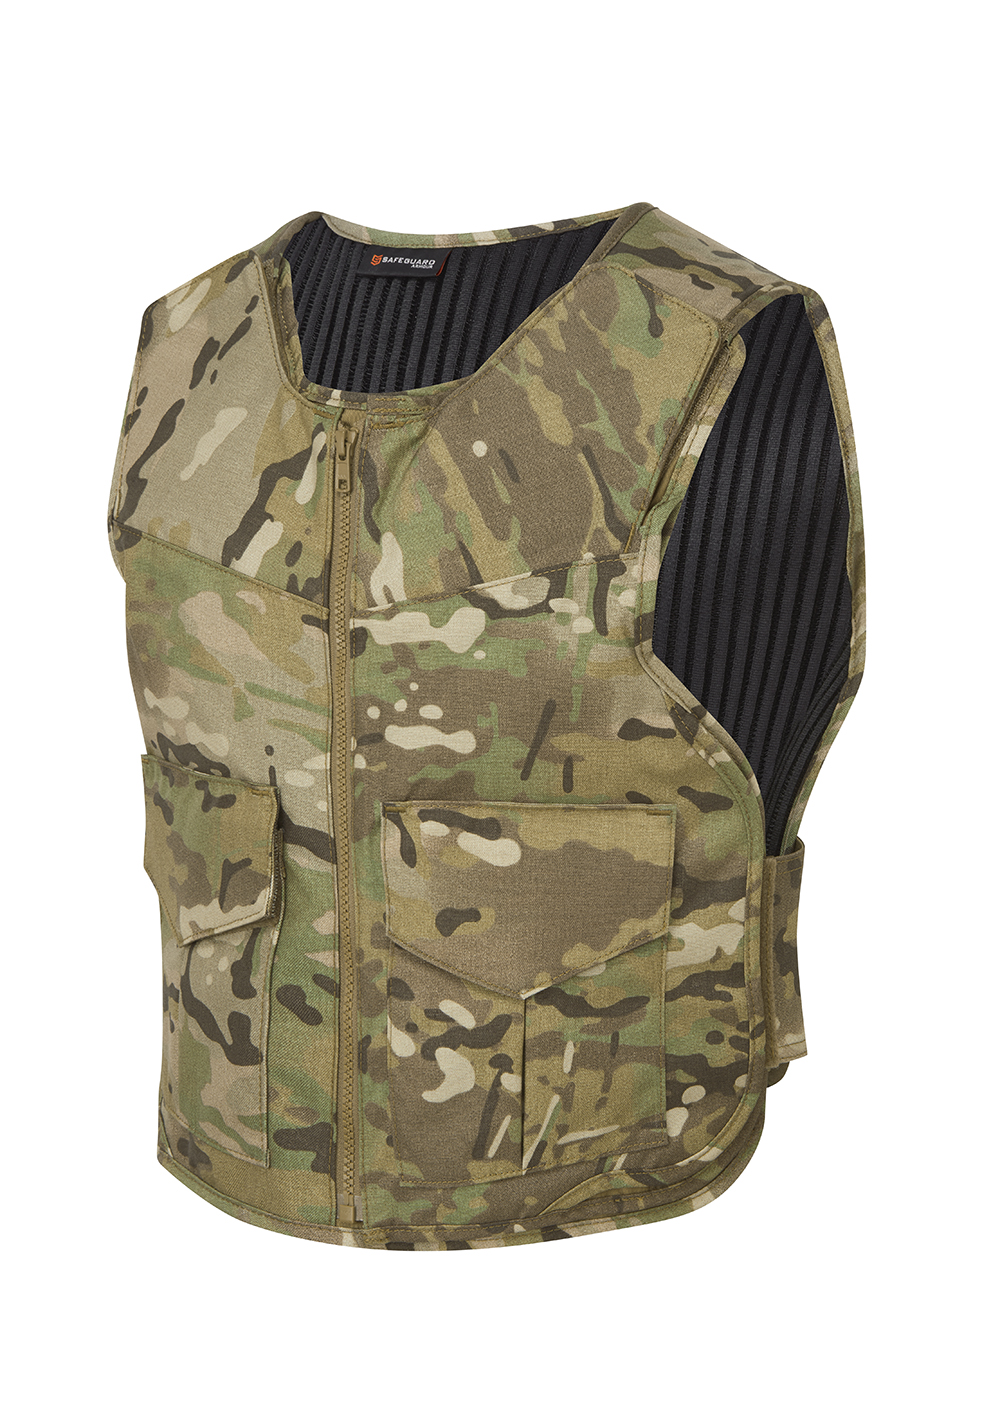 SafeGuard Armour Patrol 2 Pockets - Clean